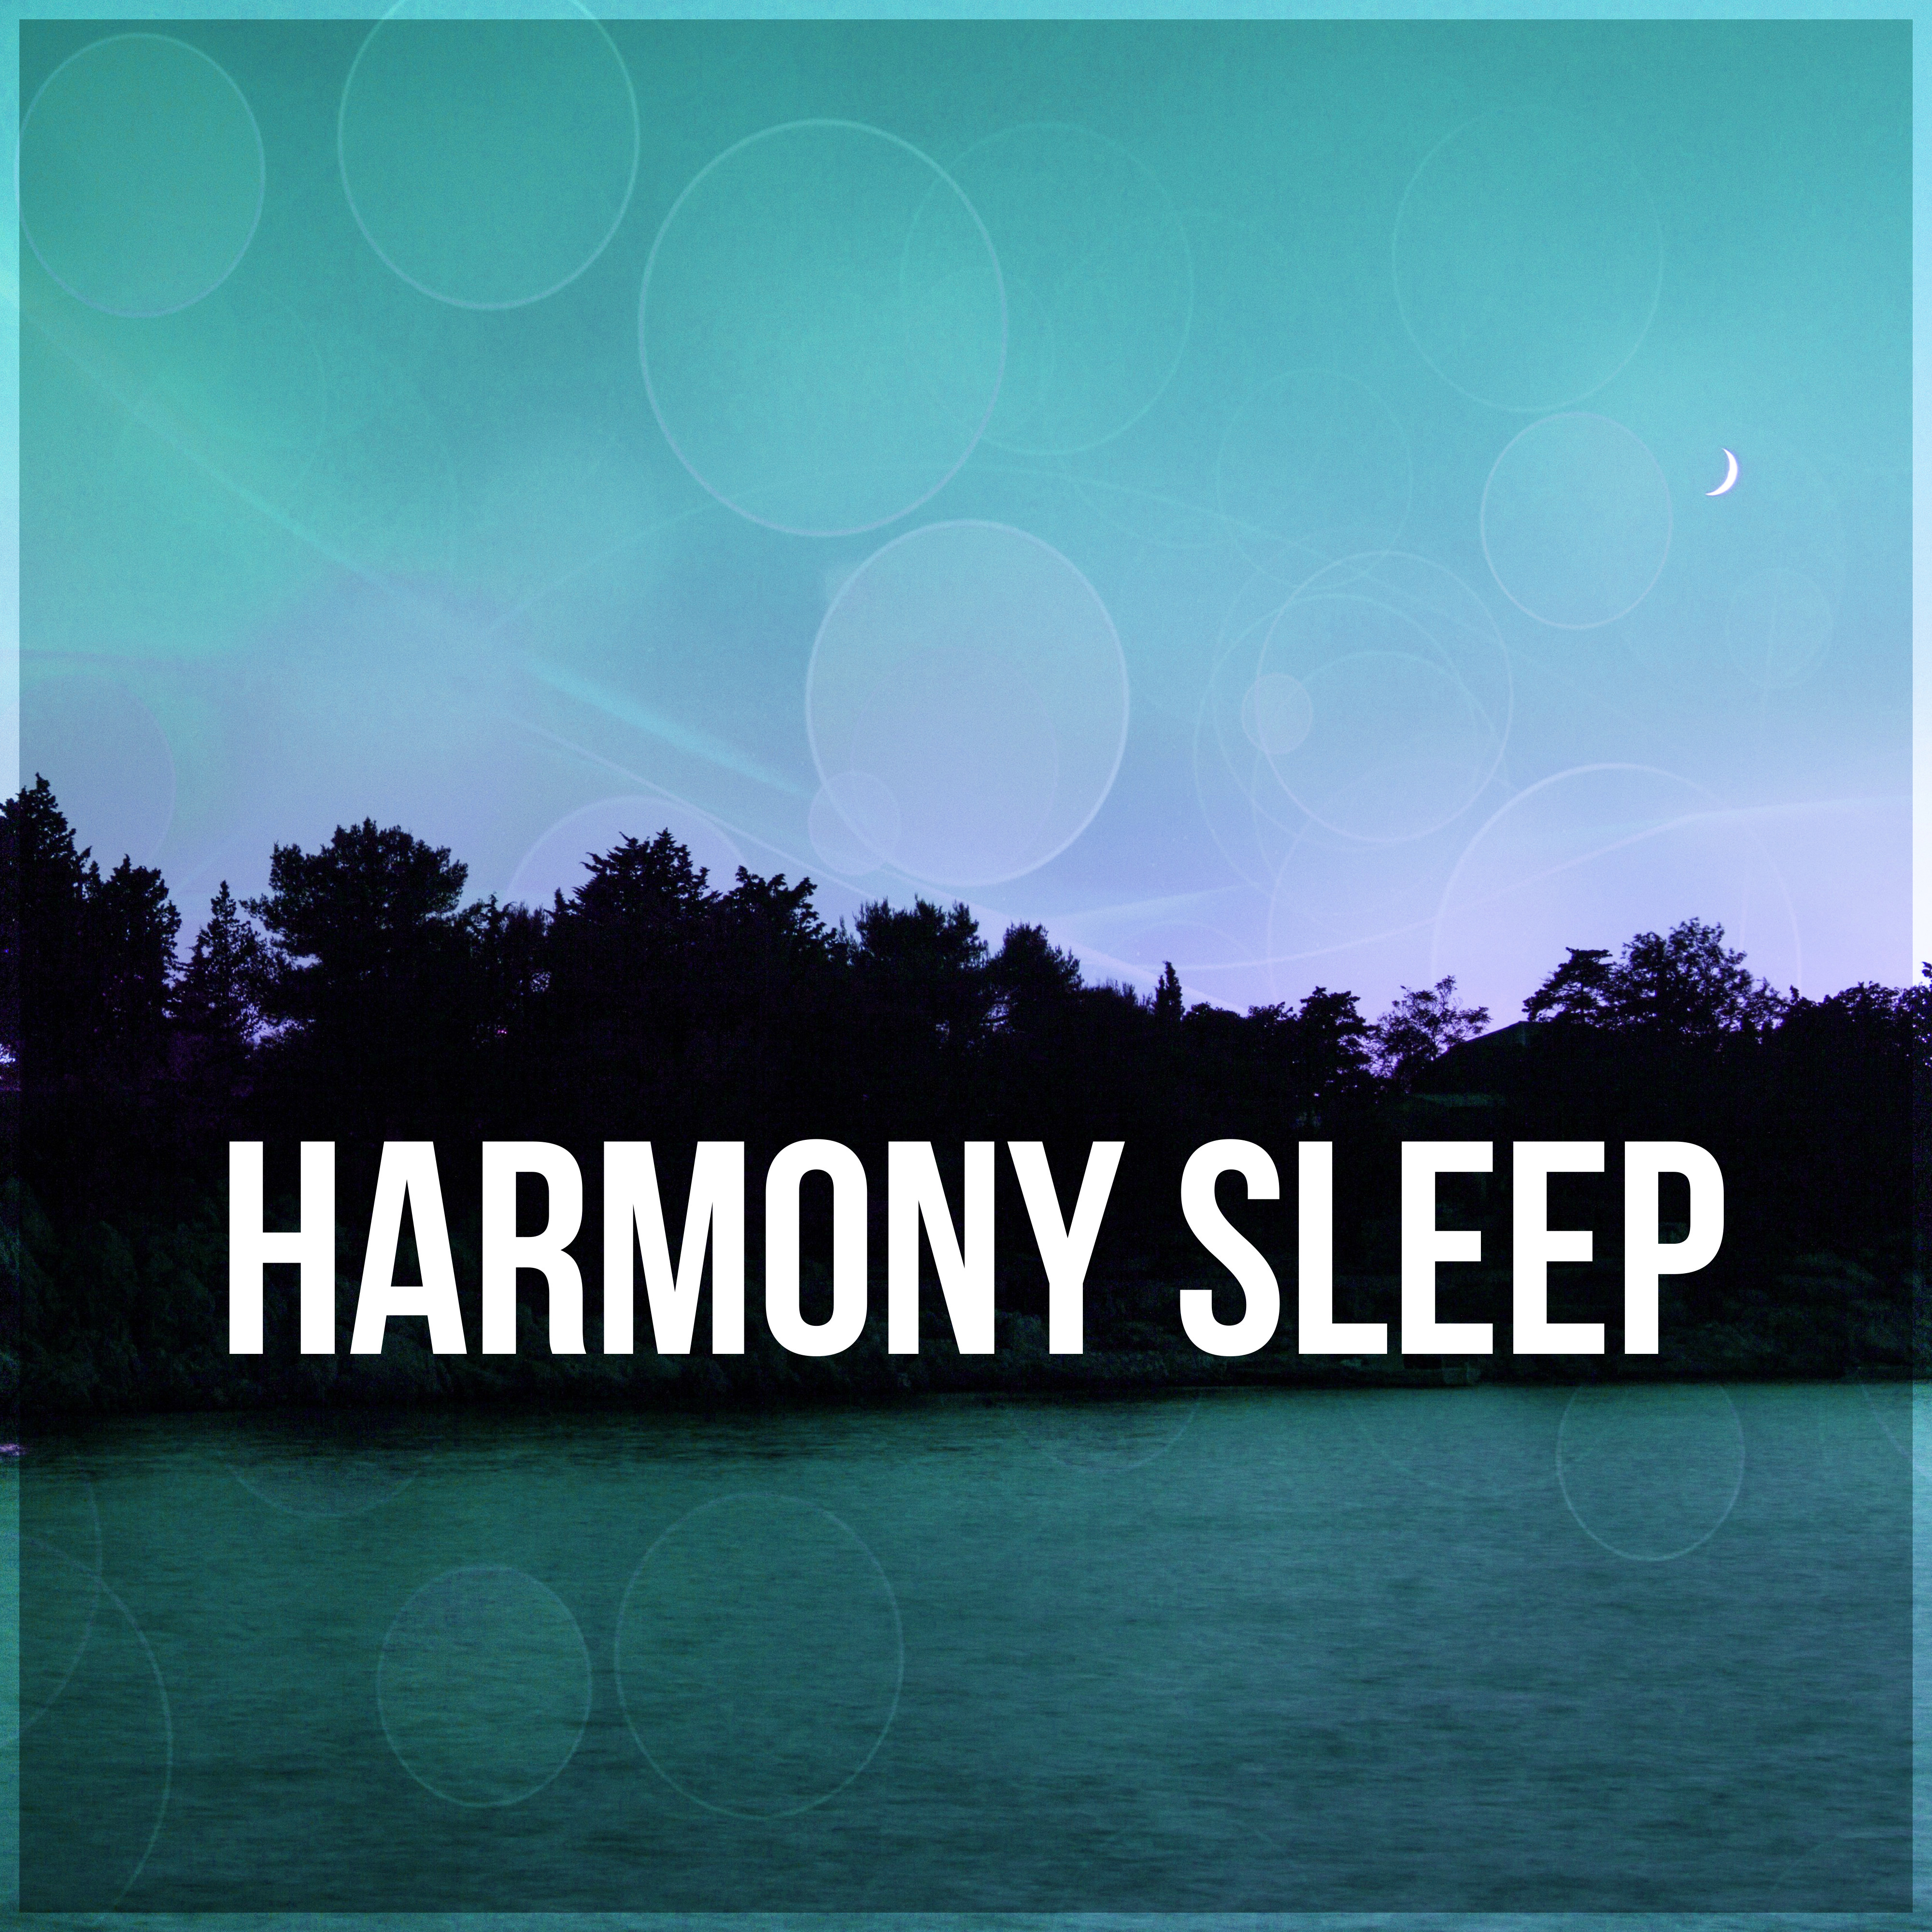 Harmony Sleep  Calm Sleep, Nature Sounds, Good Night, Music for Insomnia, Soothing Sounds for Sleep, Deep Relaxation